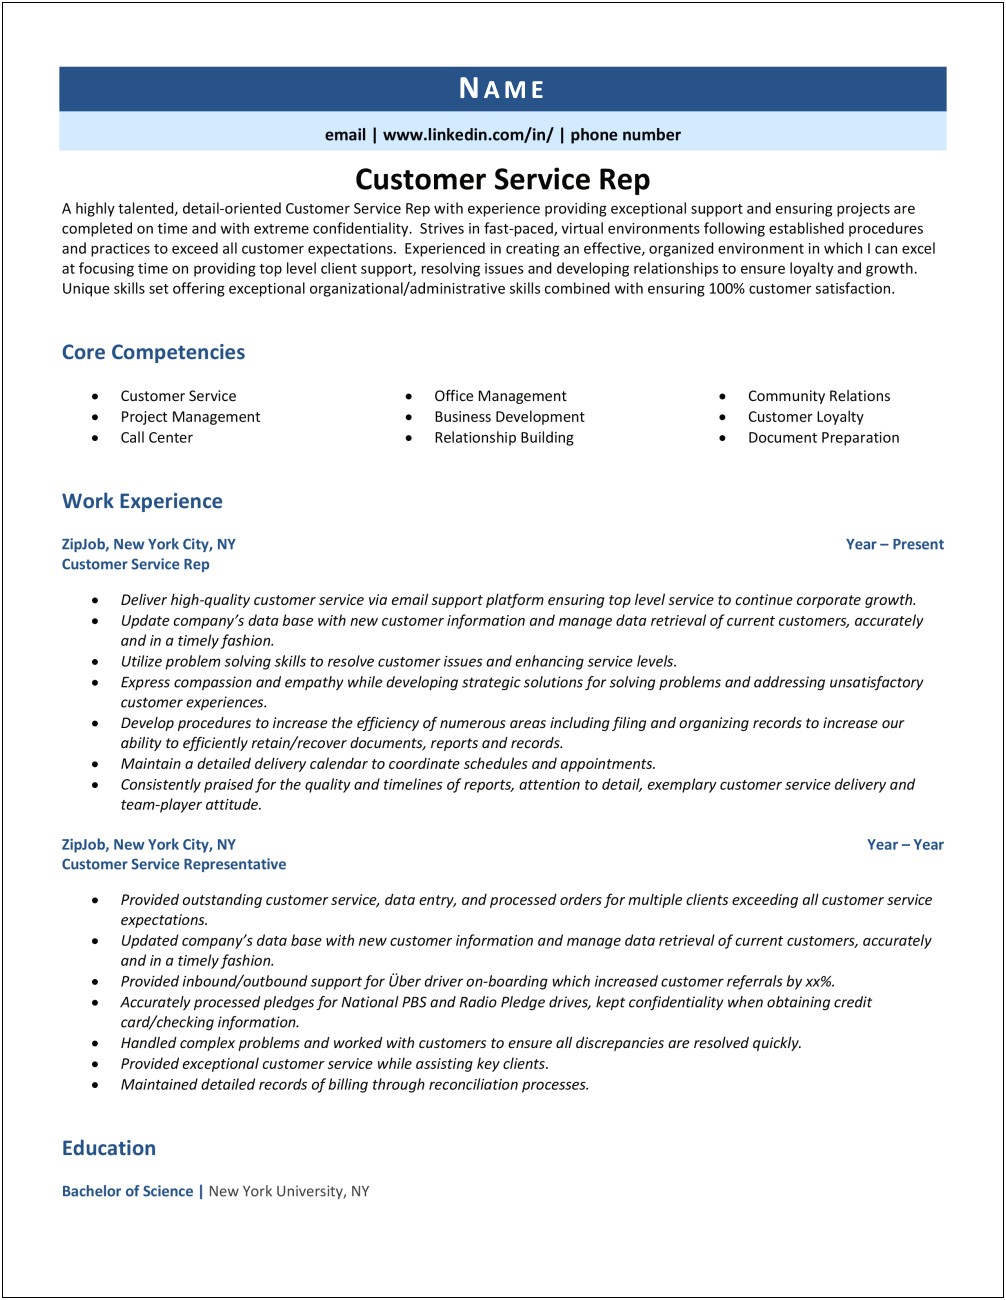 Customer Service Rep Job Description Resume